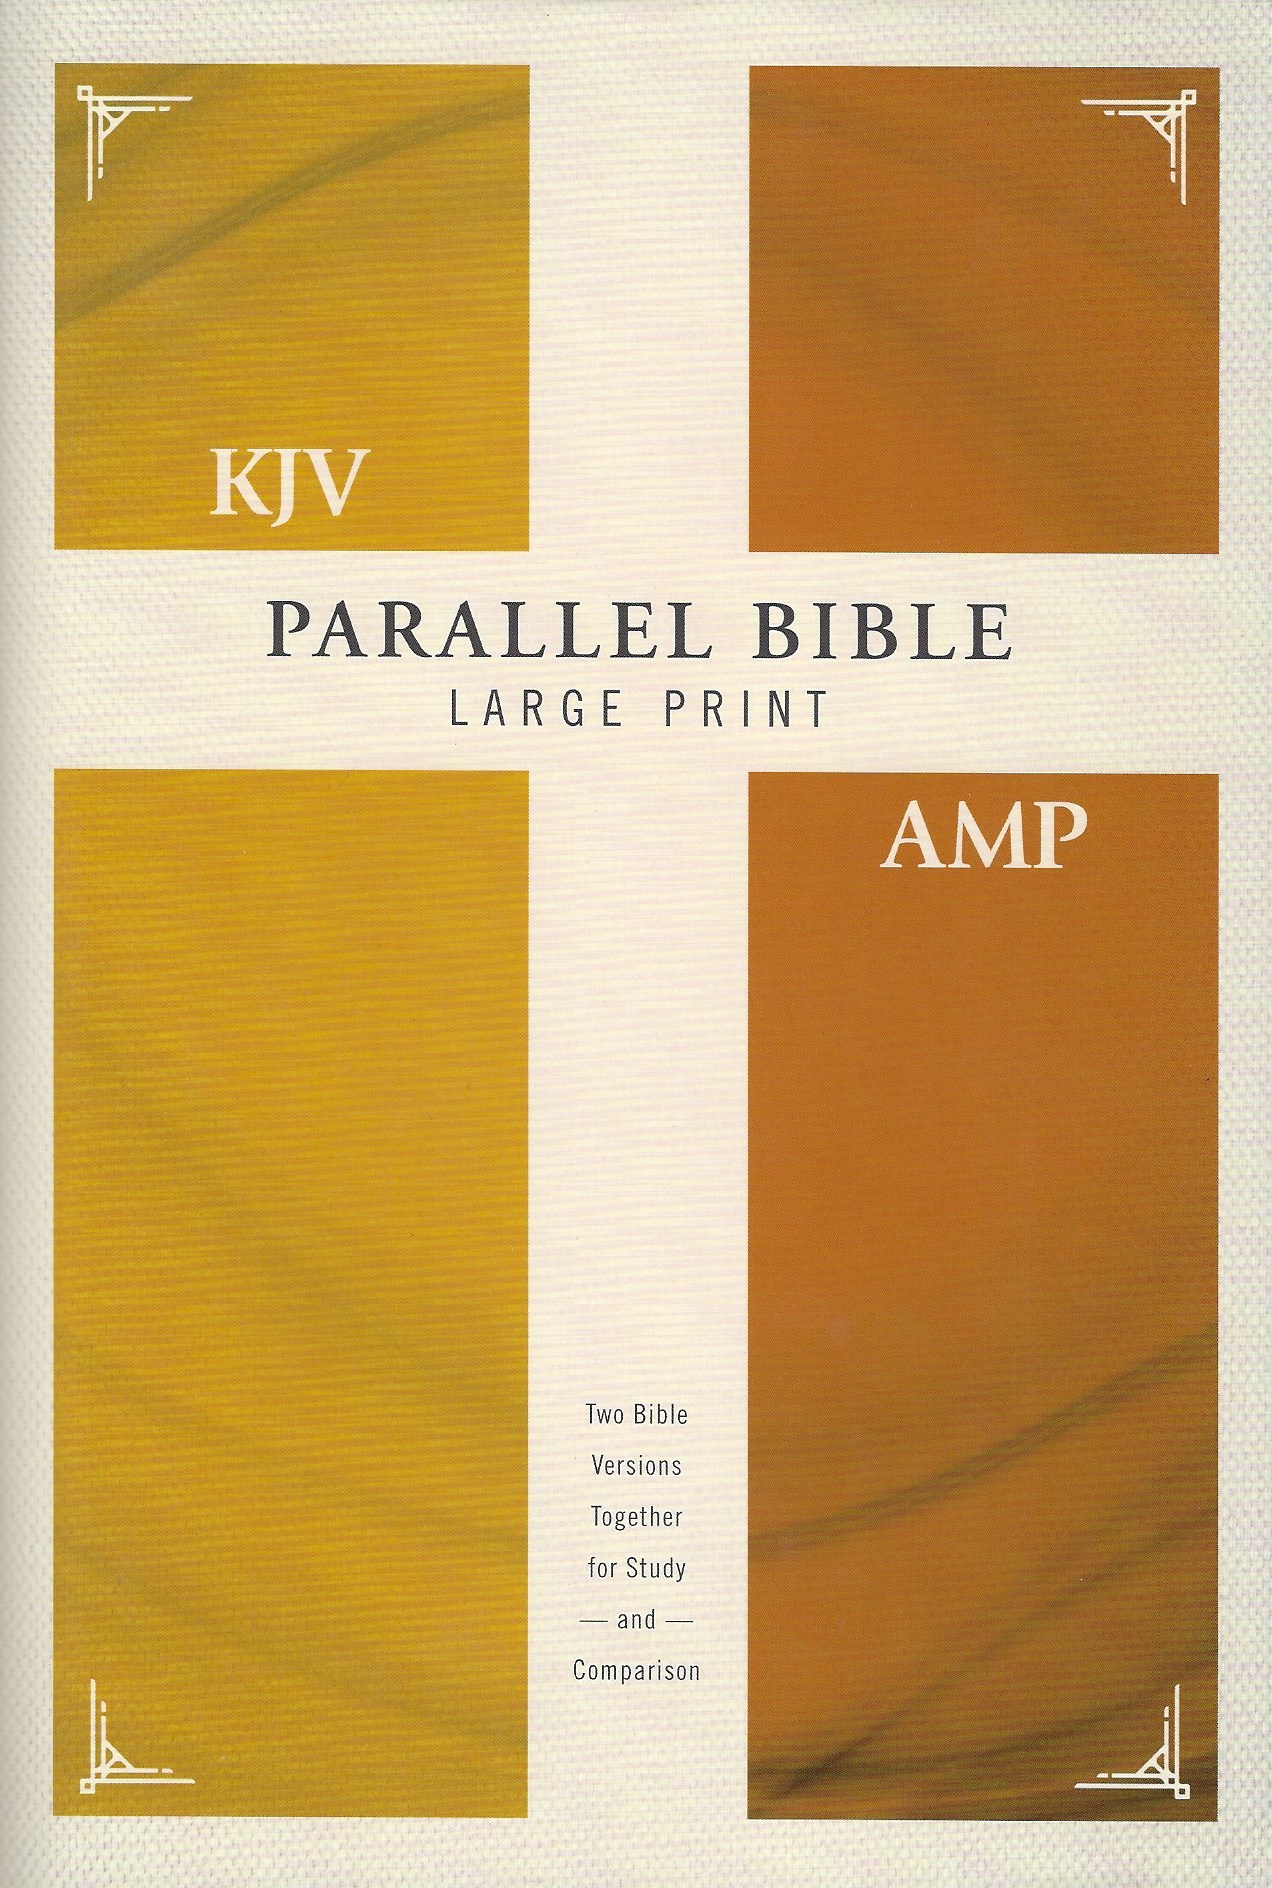 KJV/AMP PARALLEL BIBLE LARGE PRINT Hardcover